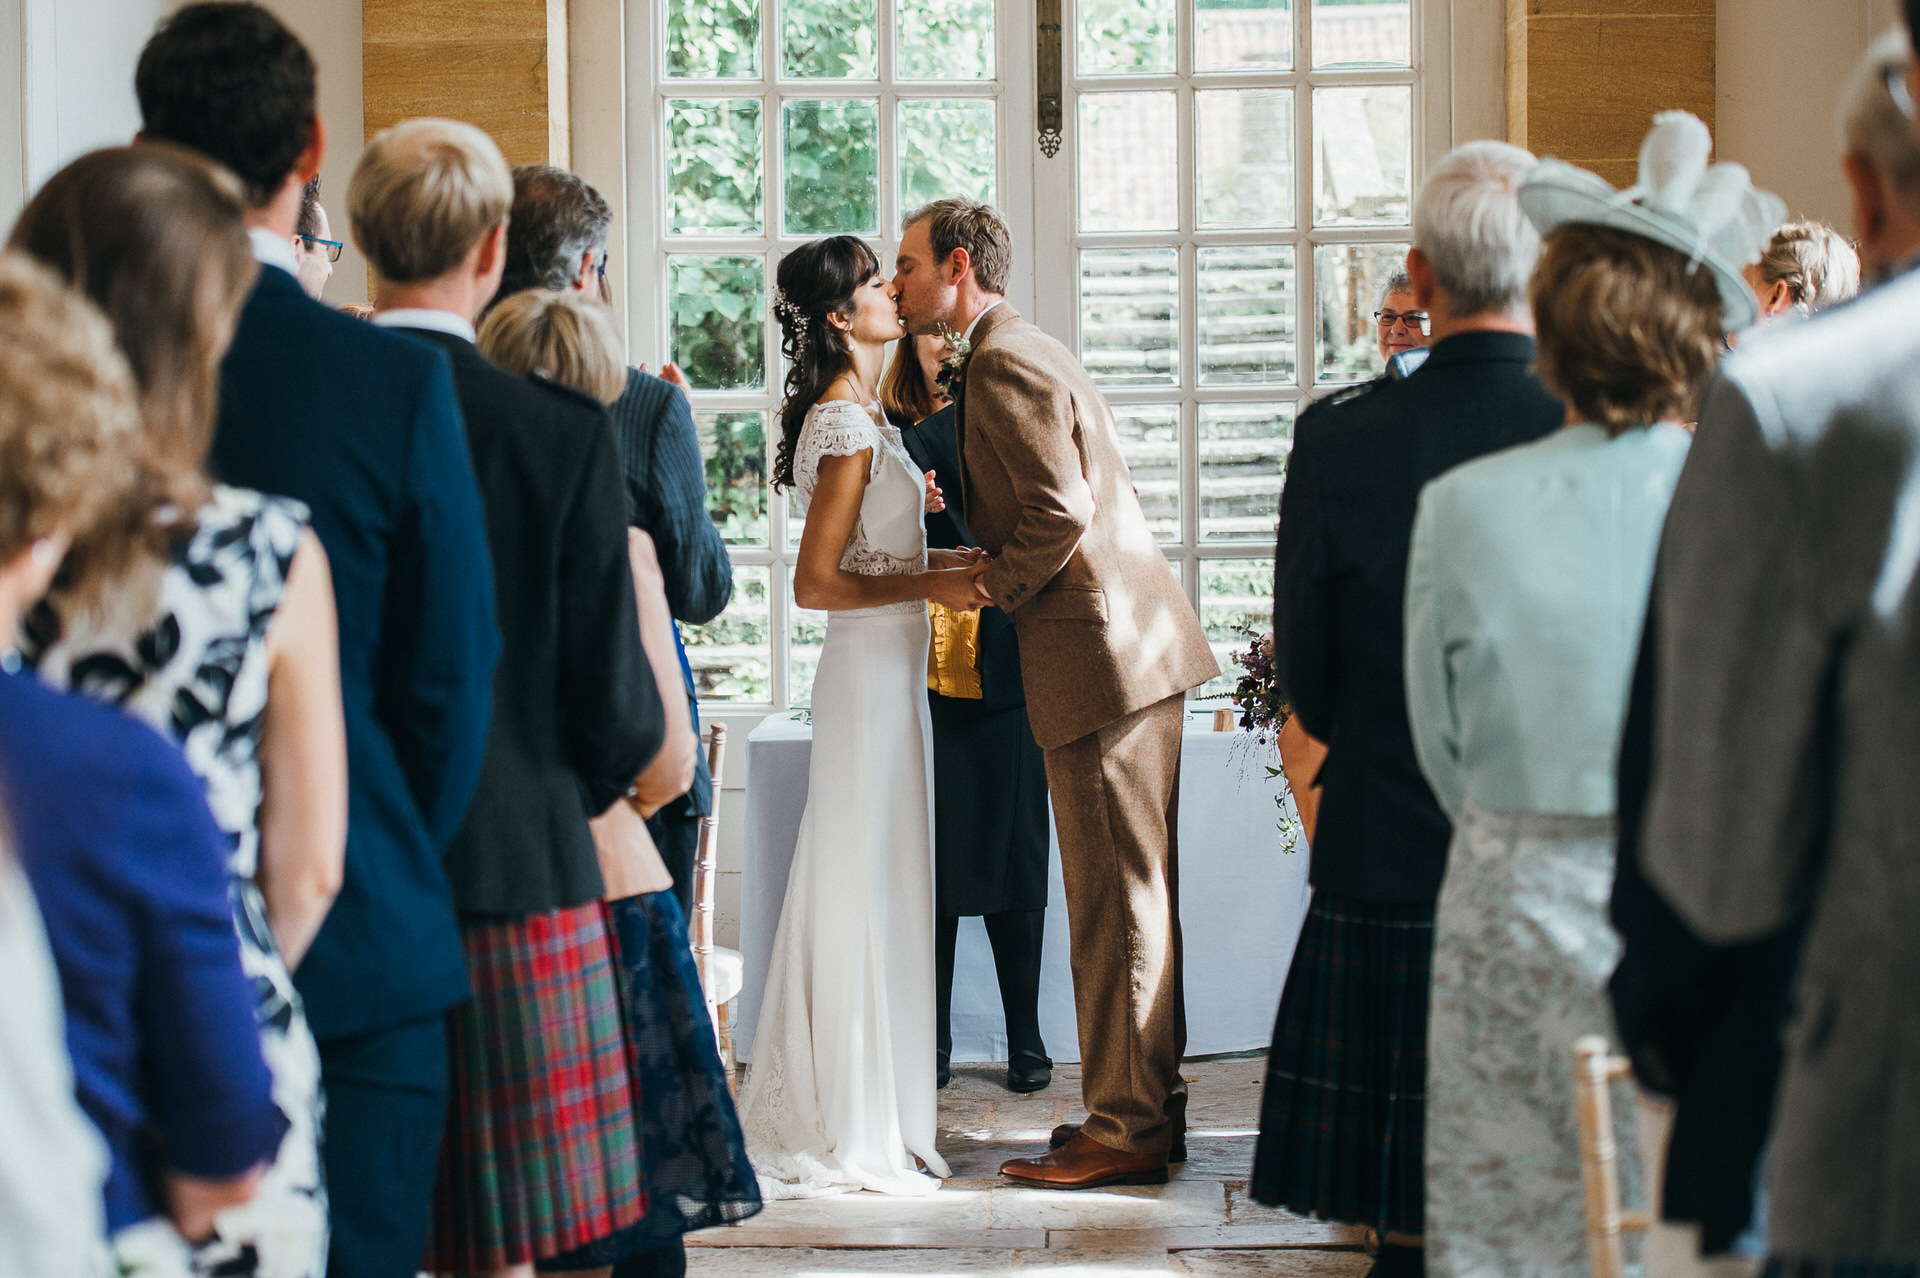 Wedding ceremony at the orangery at hestercombe gardens